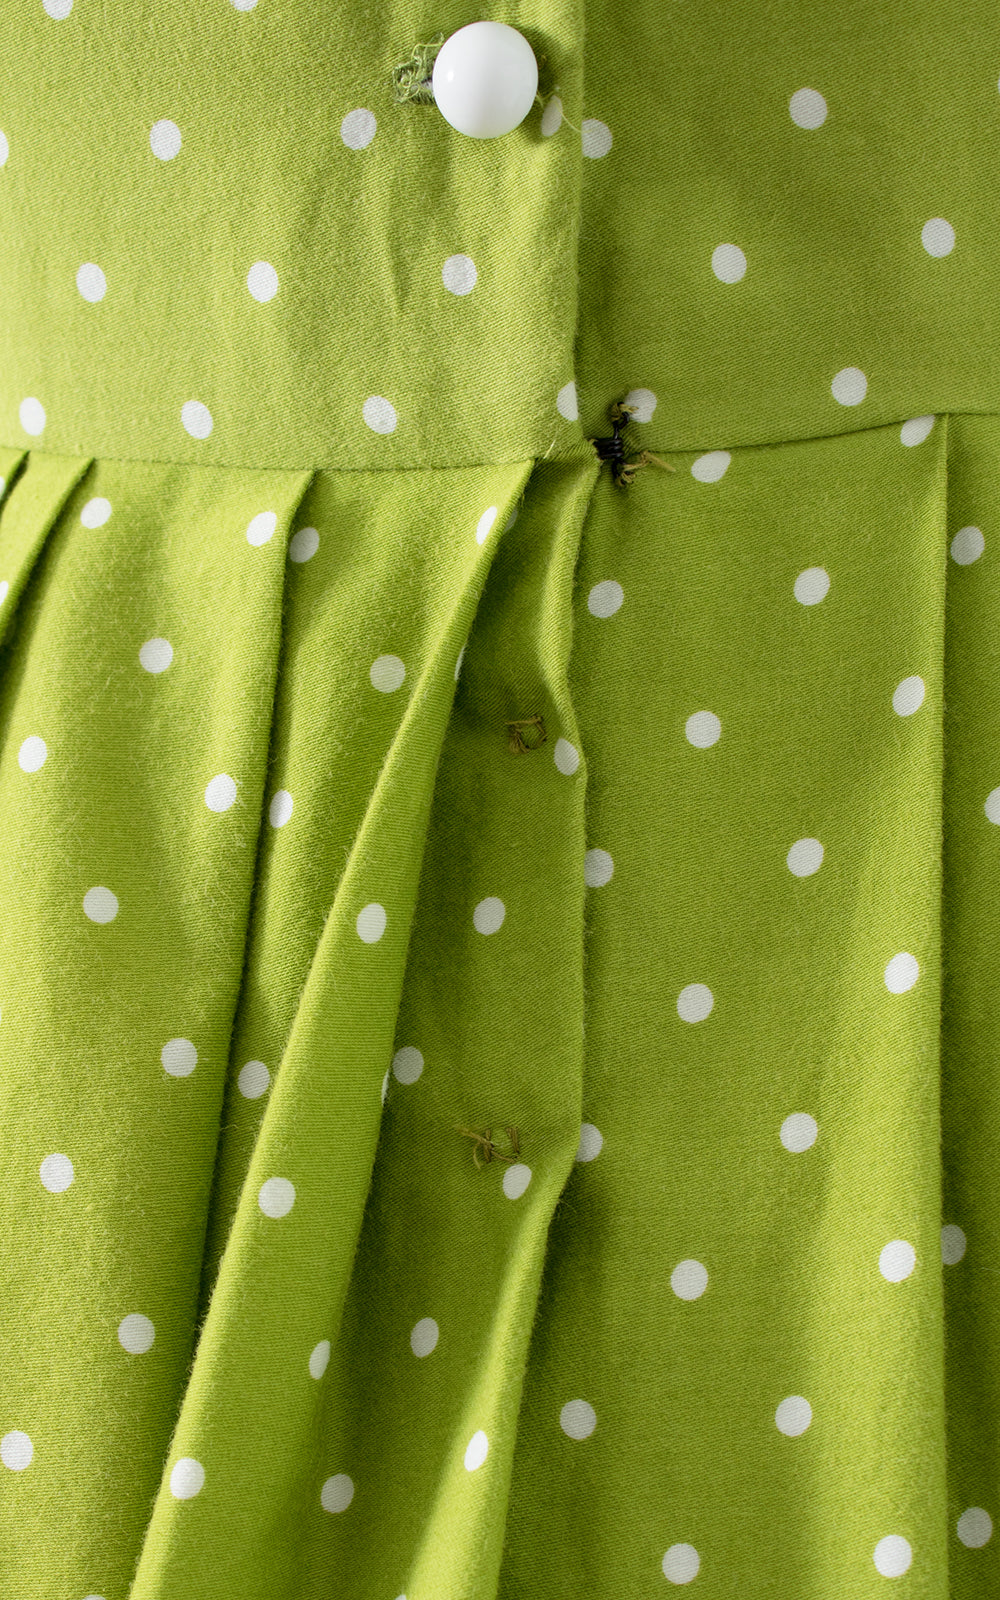 Modern 1950s Style Polka Dot Shirtwaist Dress